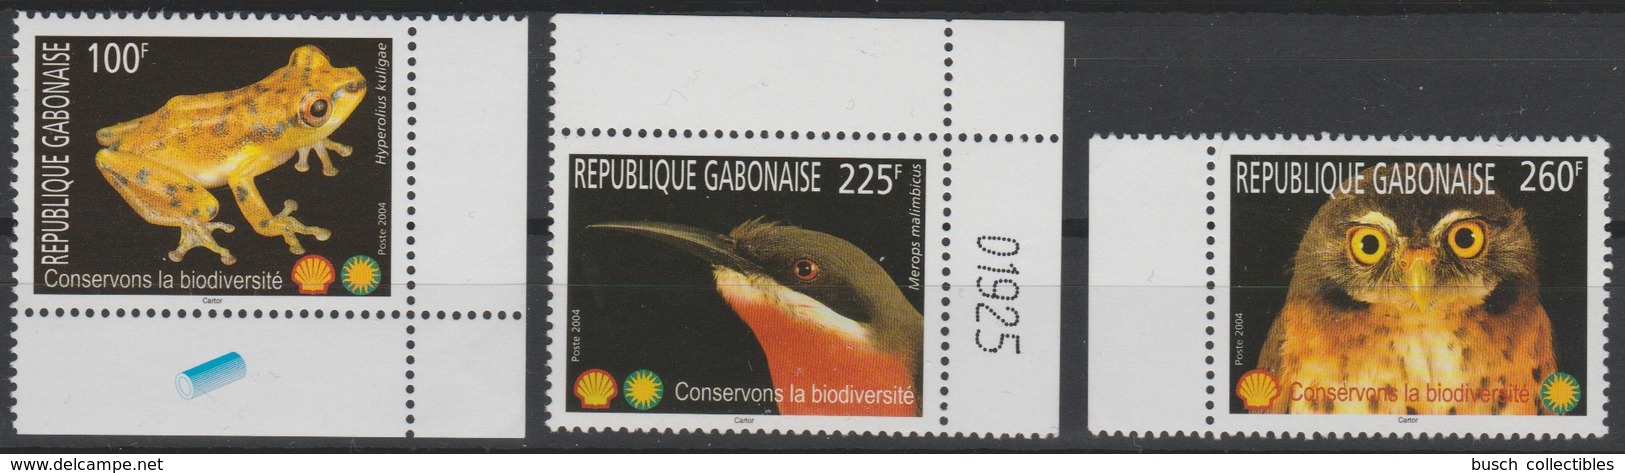 Gabon Gabun 2004 Mi. 1673 1675 1676 Conservons La Biodiversité Faune Fauna Bird Owl Reptile ULTRA Scarce  MNH** - Gabun (1960-...)